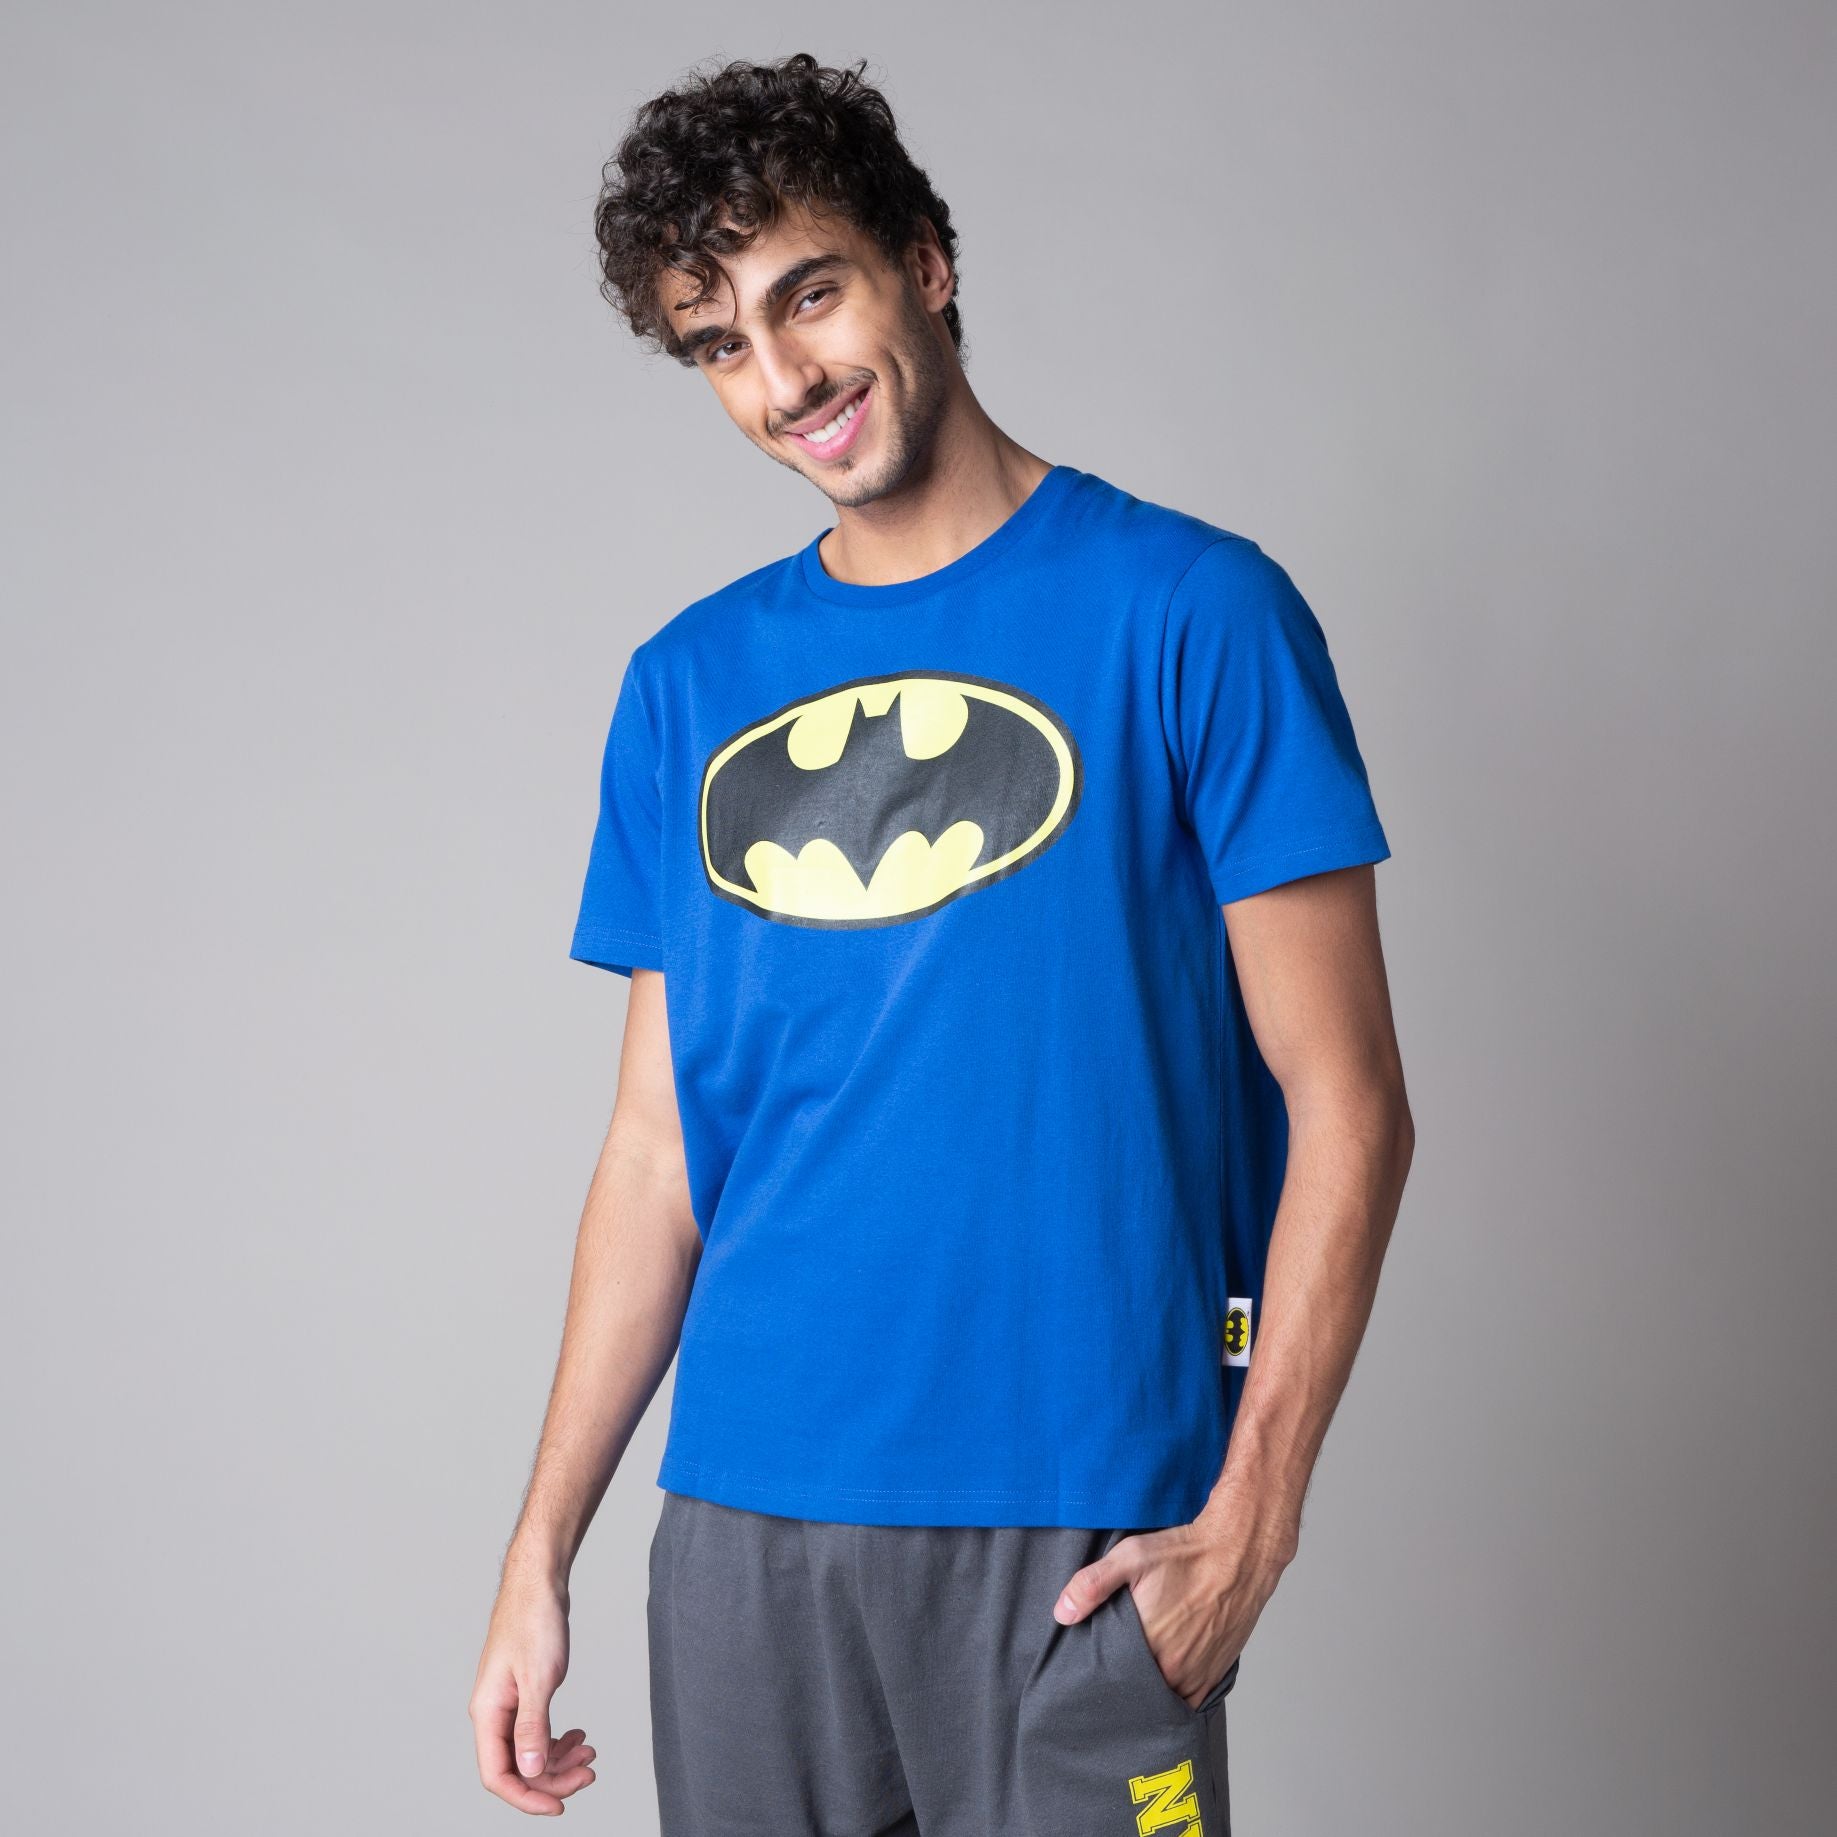 Batman Men's Short Pyjama Set